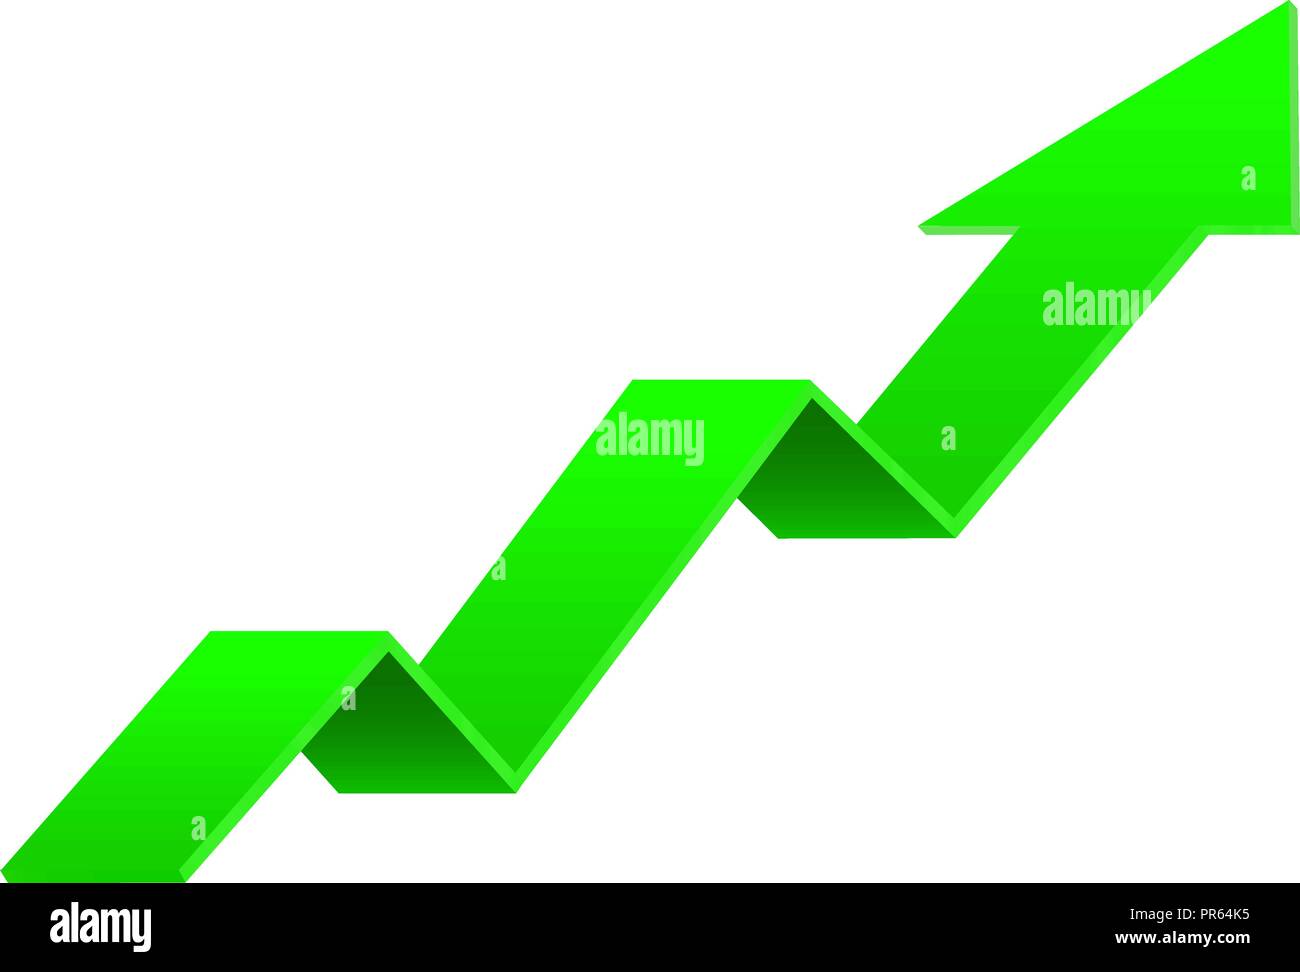 Green UP arrow. Financial indication sign Stock Vector